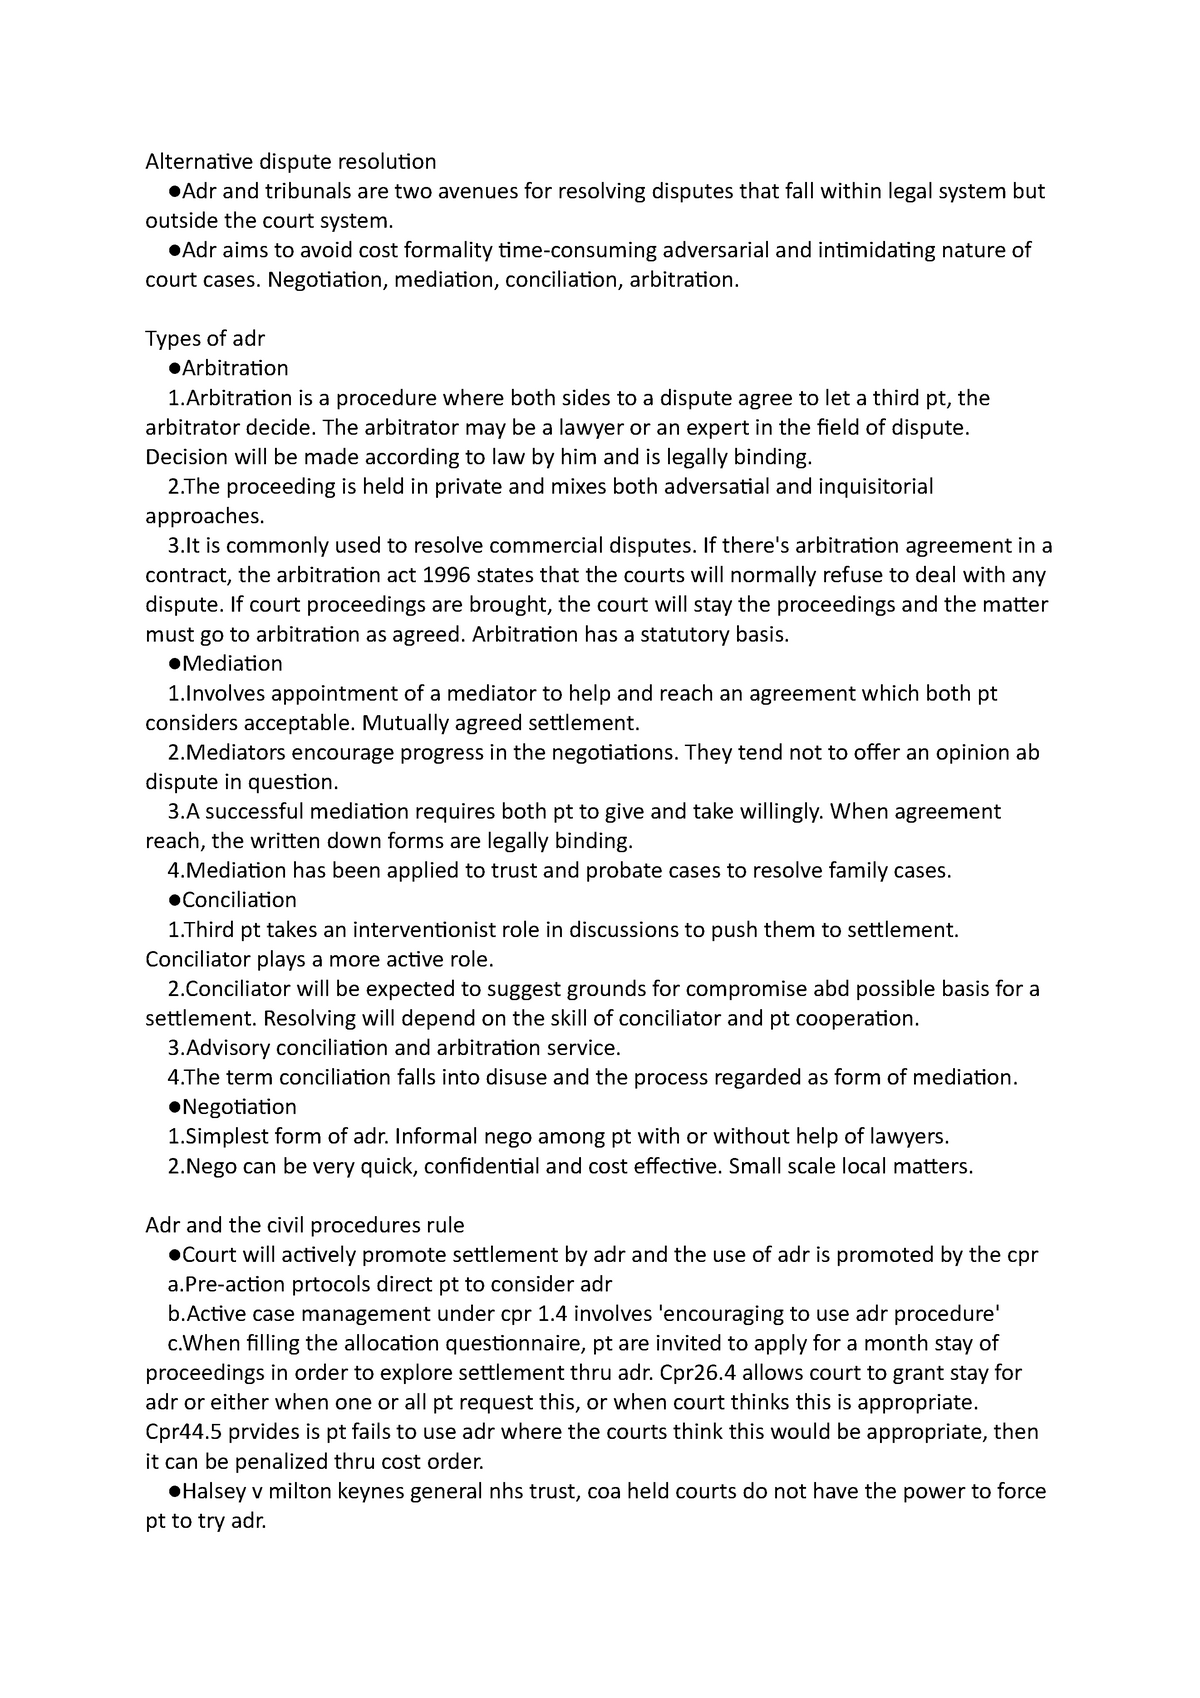 alternative dispute resolution essay uk